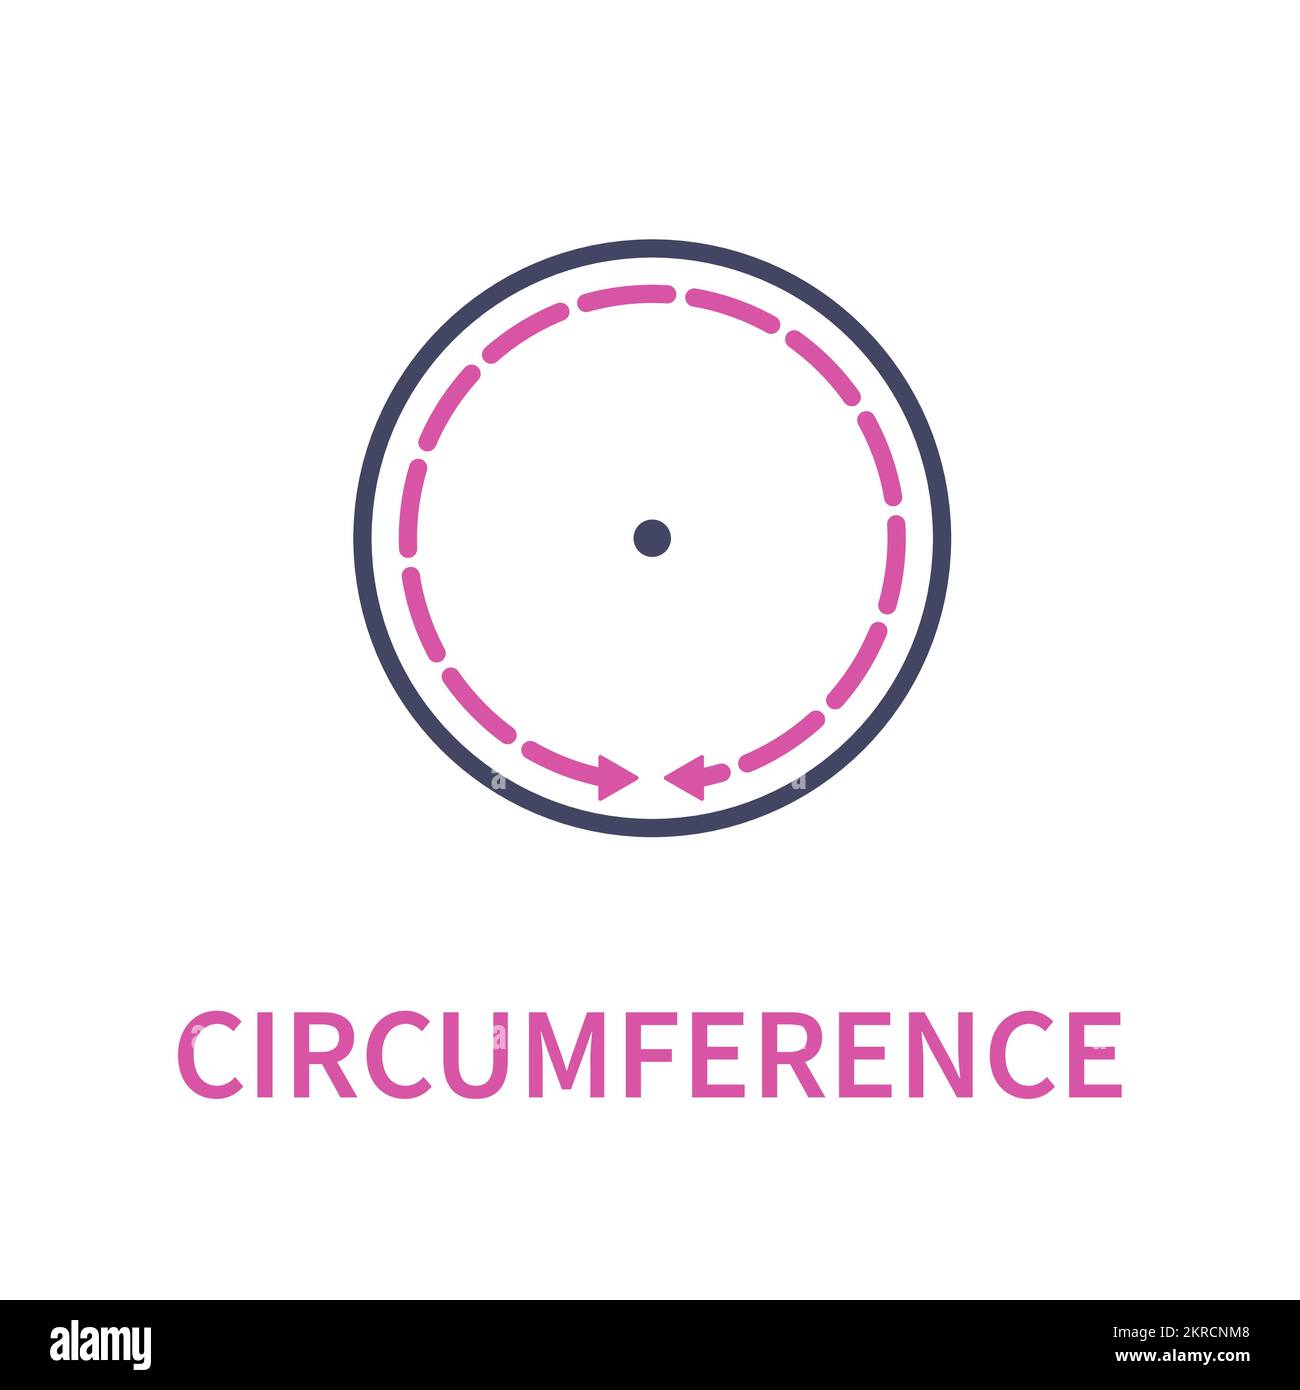 Circumference circle geometric diagram icon Stock Vector